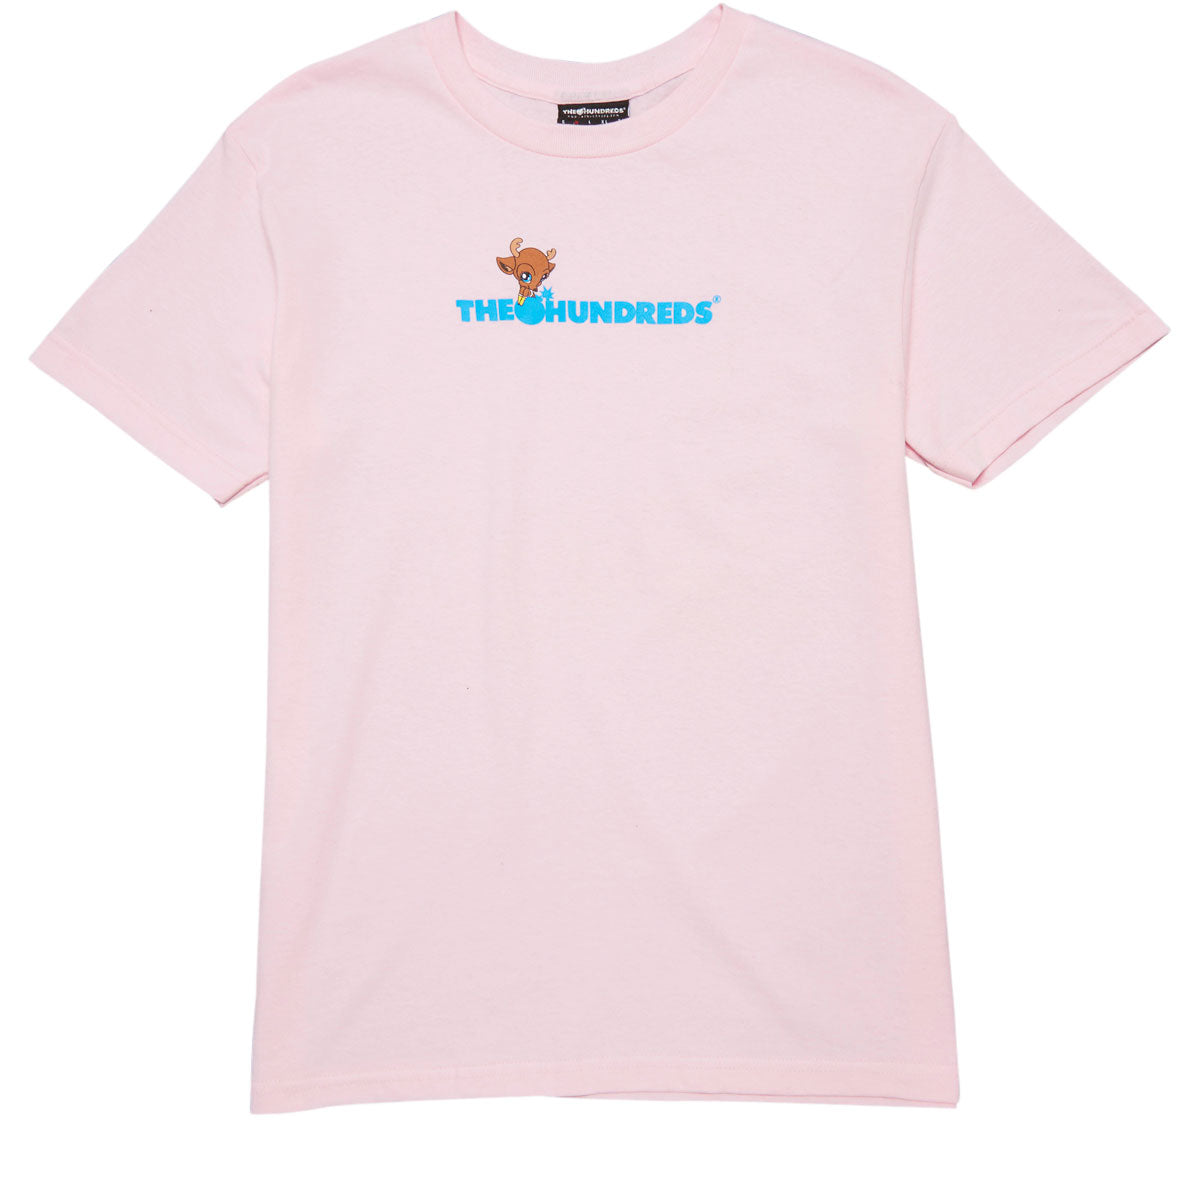 The Hundreds x Ron English Fawn T-Shirt - Pink image 1